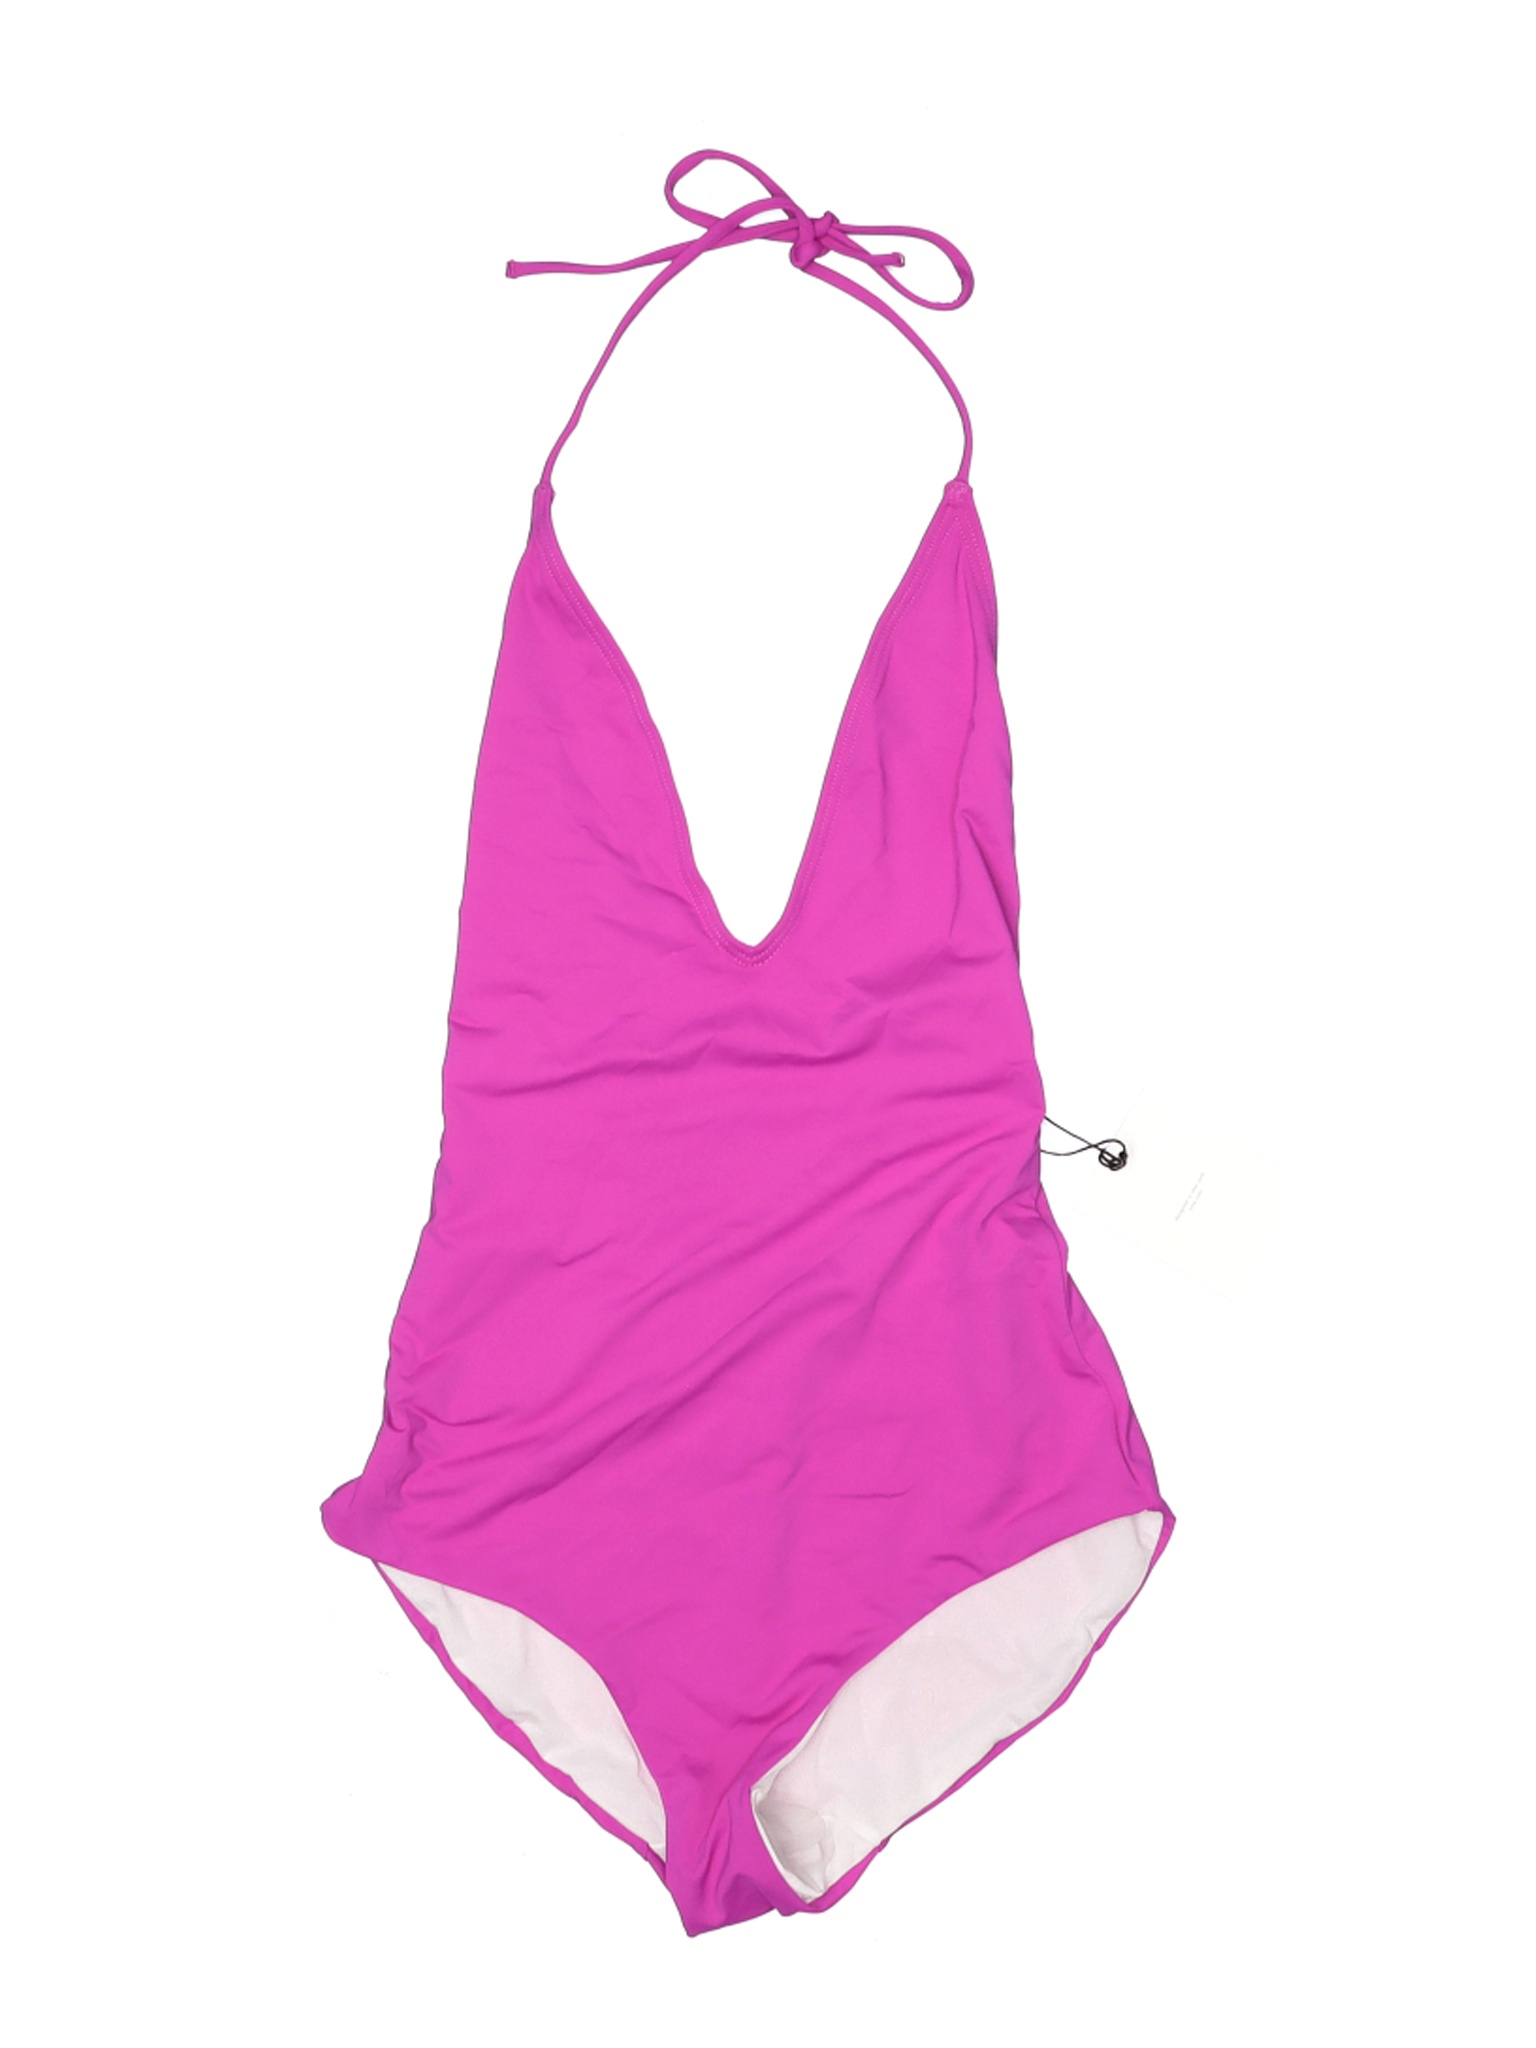 NWT Onia Women Pink One Piece Swimsuit S | eBay